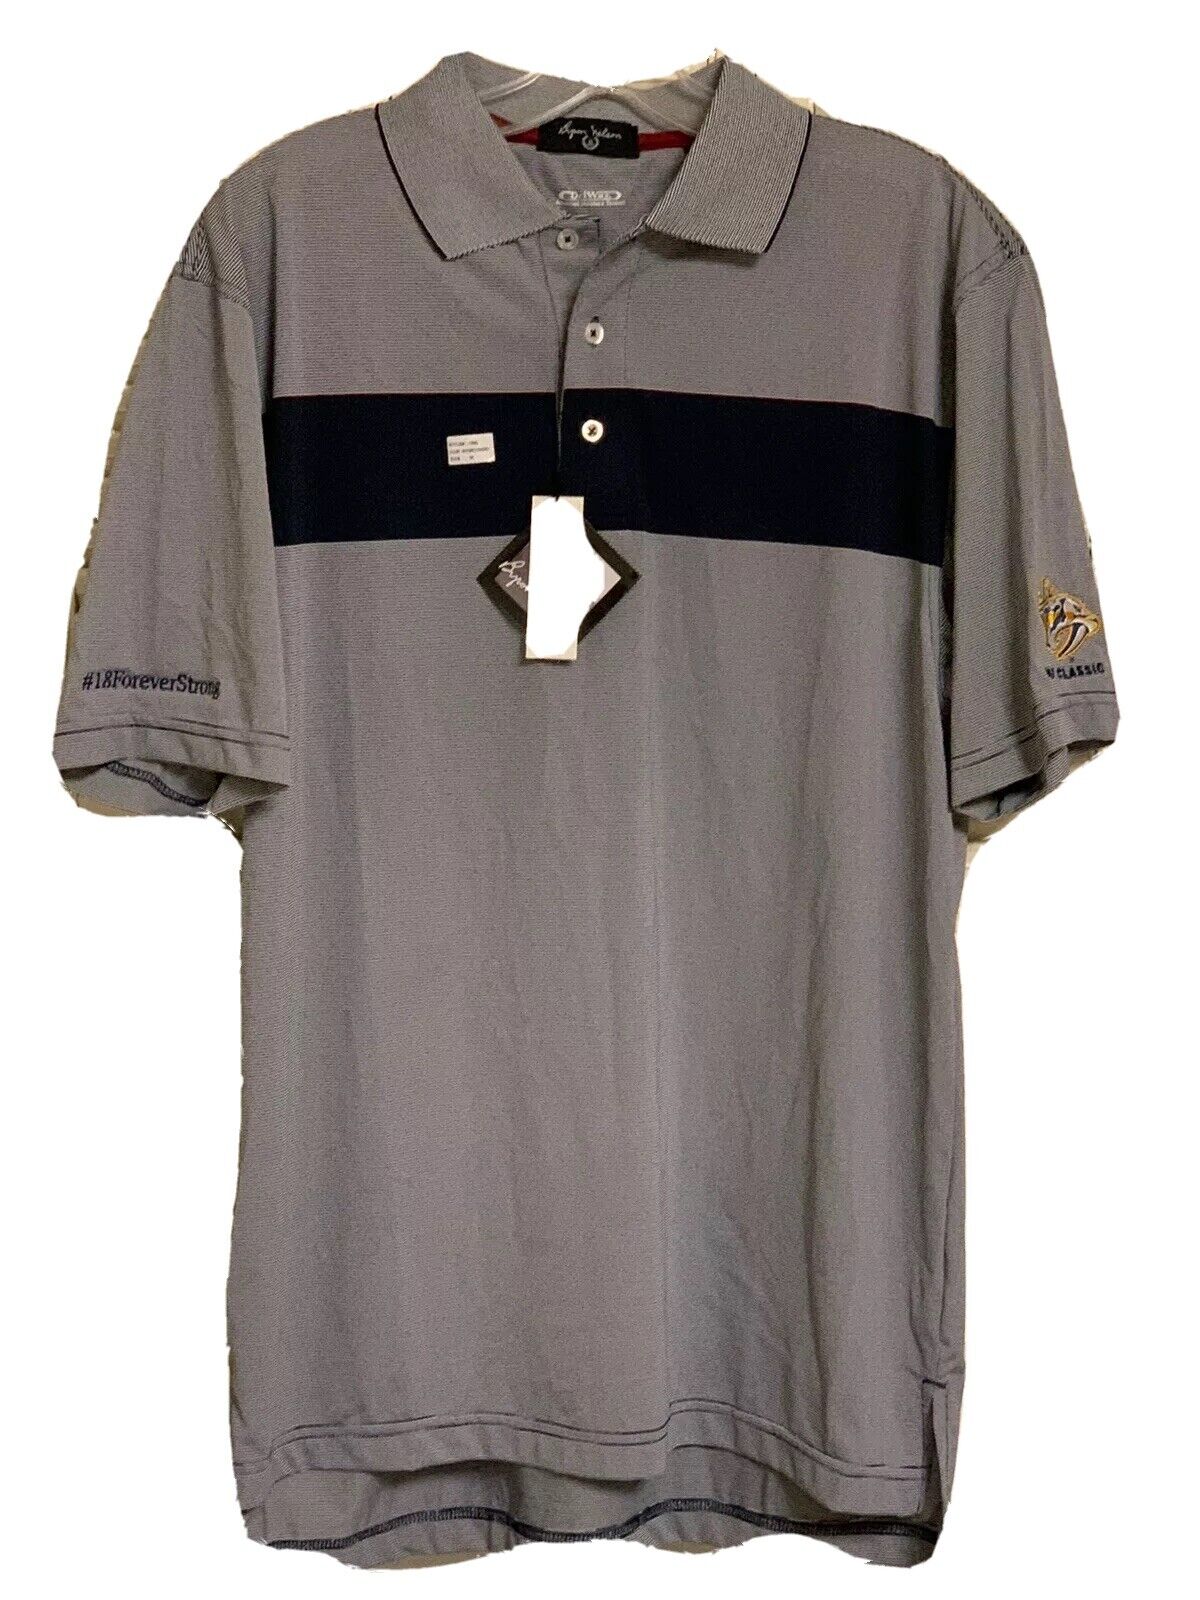 Byron Nelson Men\'s Performance Golf Polo Shirt Sz Medium Navy Blue White Cherry